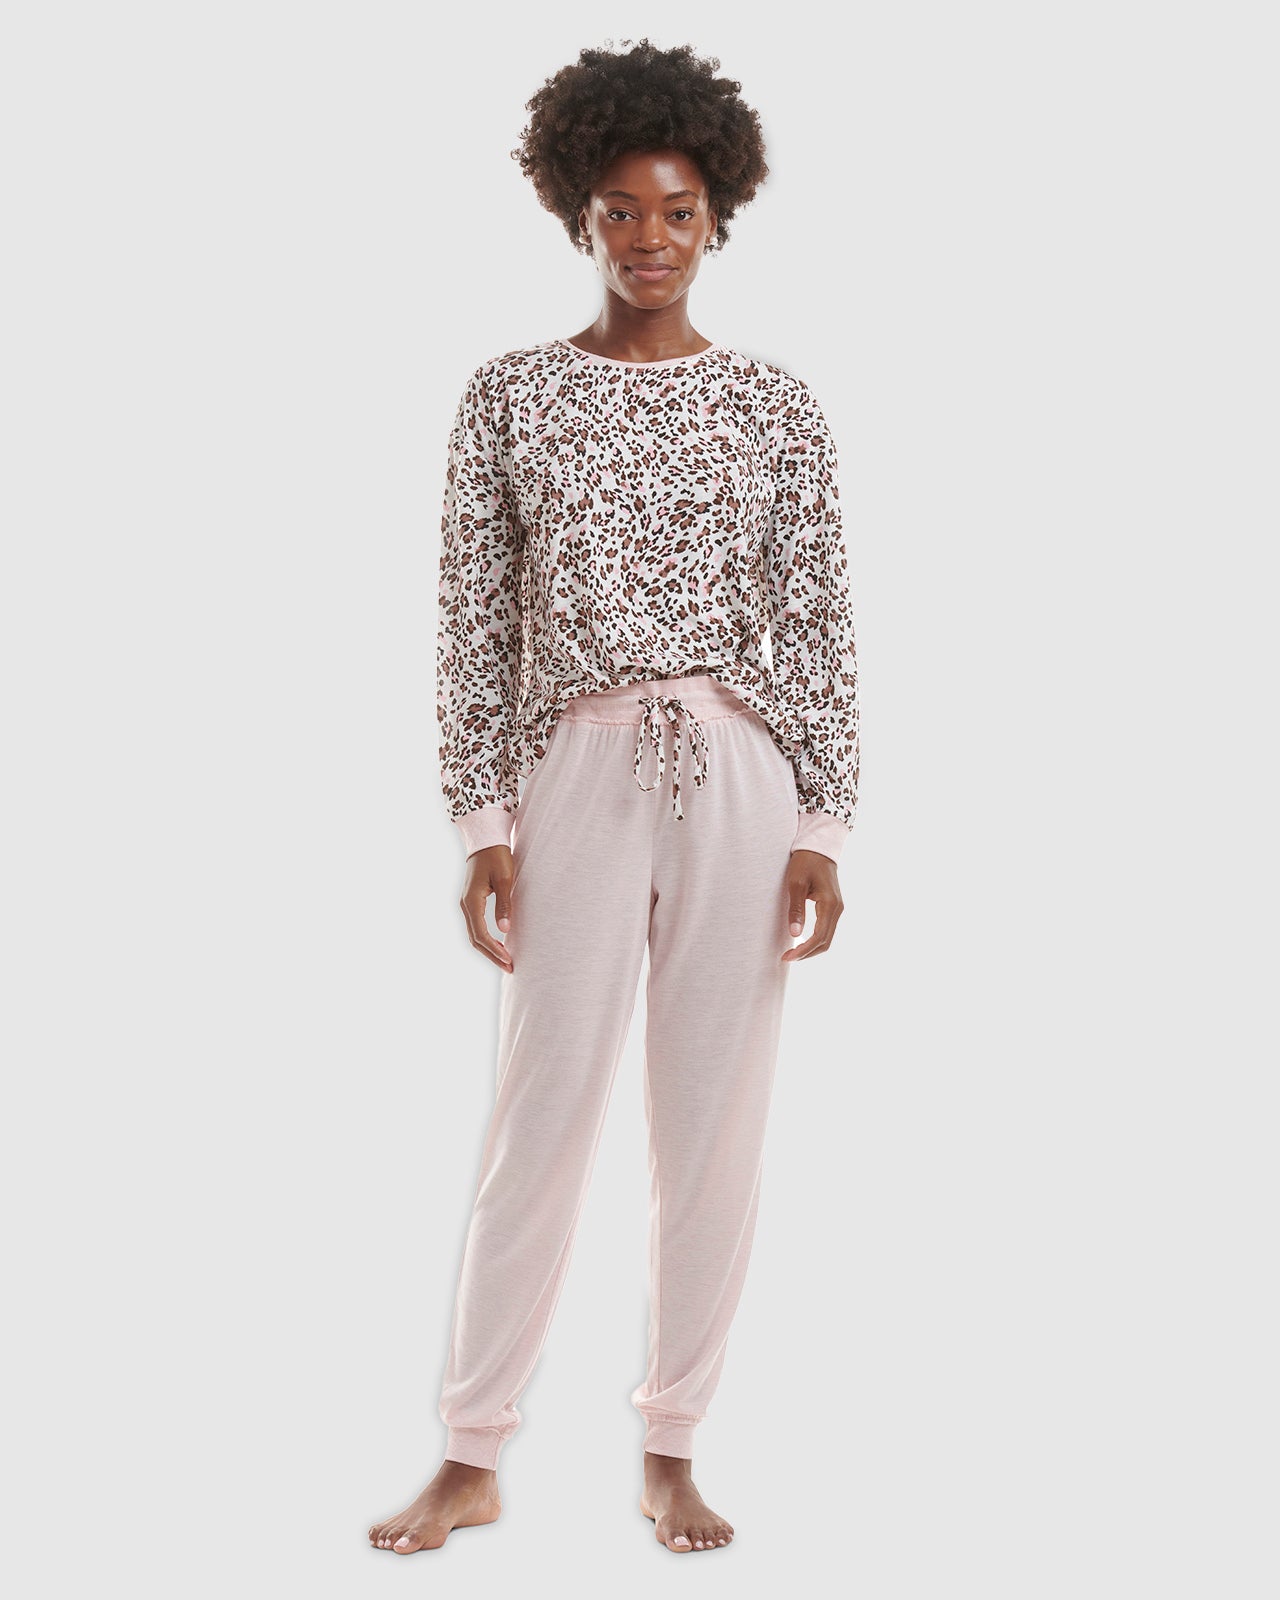 DAVID NIEPER Woman's Sleepwear Loungewear Underwear CATALOG Spring 2020